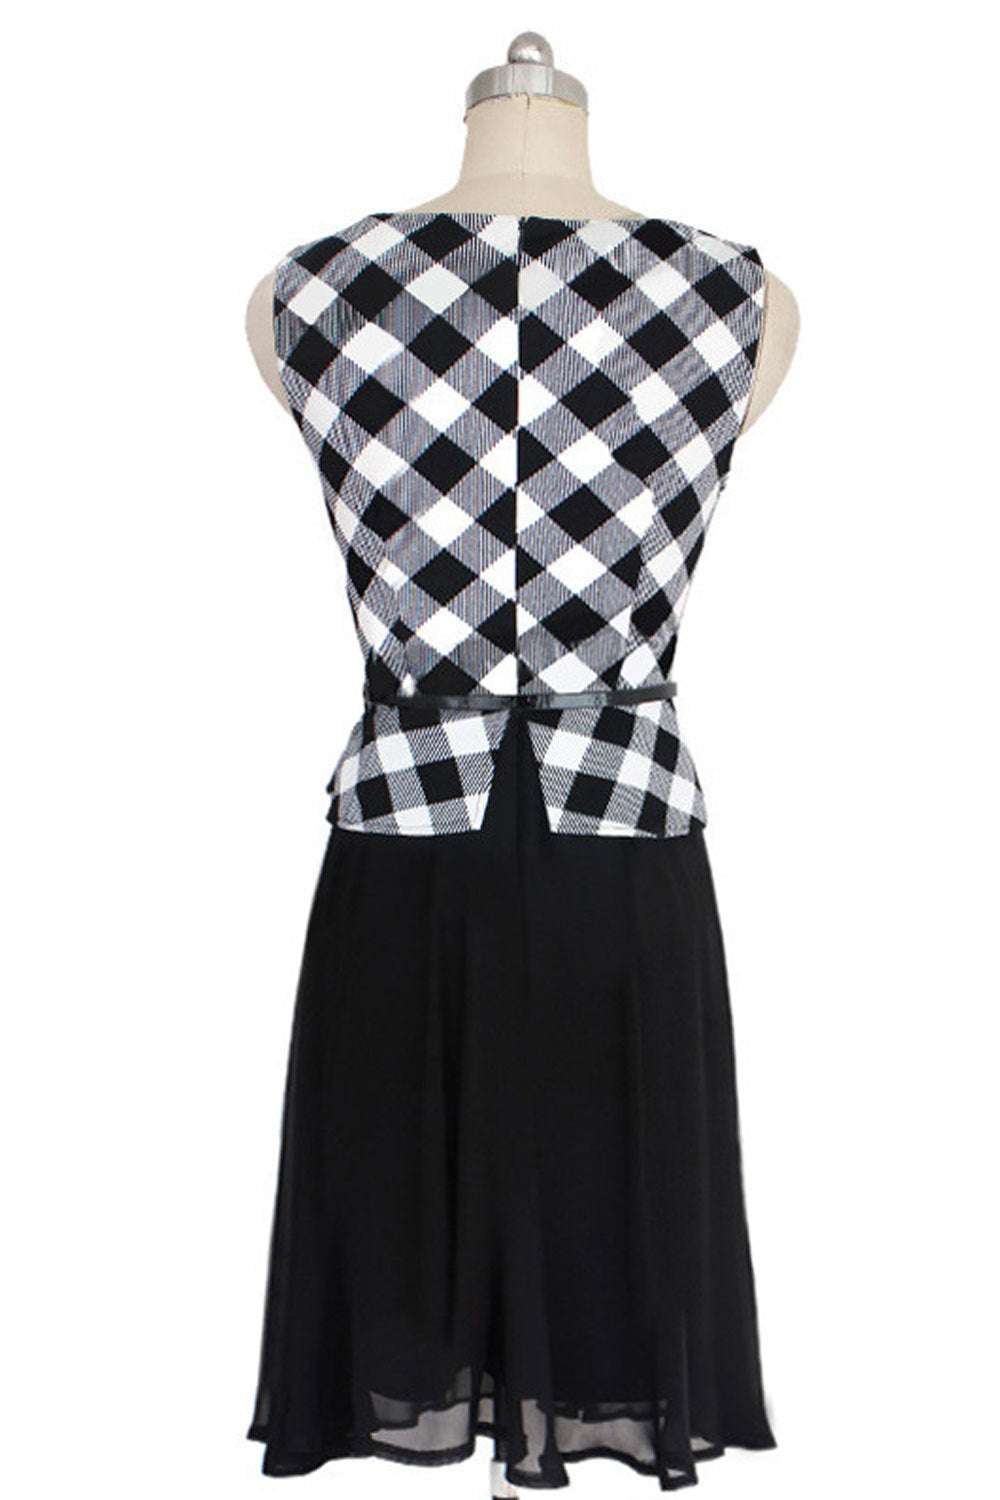 Ketty More Women Sleeveless Plaid Pattern Skirt Halter Chiffon Dress Black White-KMWD294